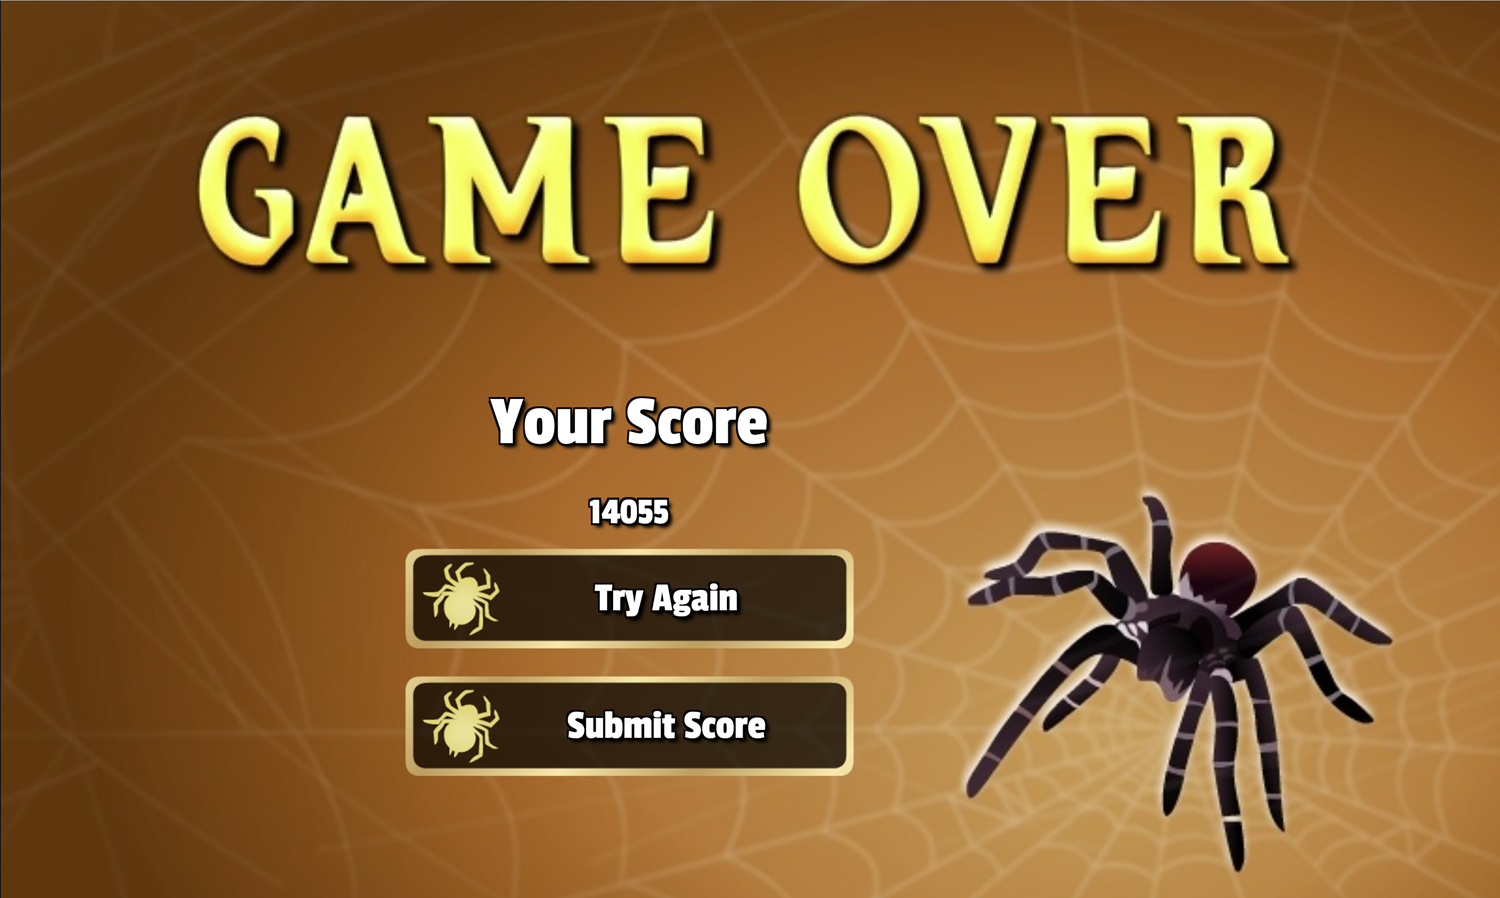 Tarantula Solitaire Game Over Screen Screenshot.